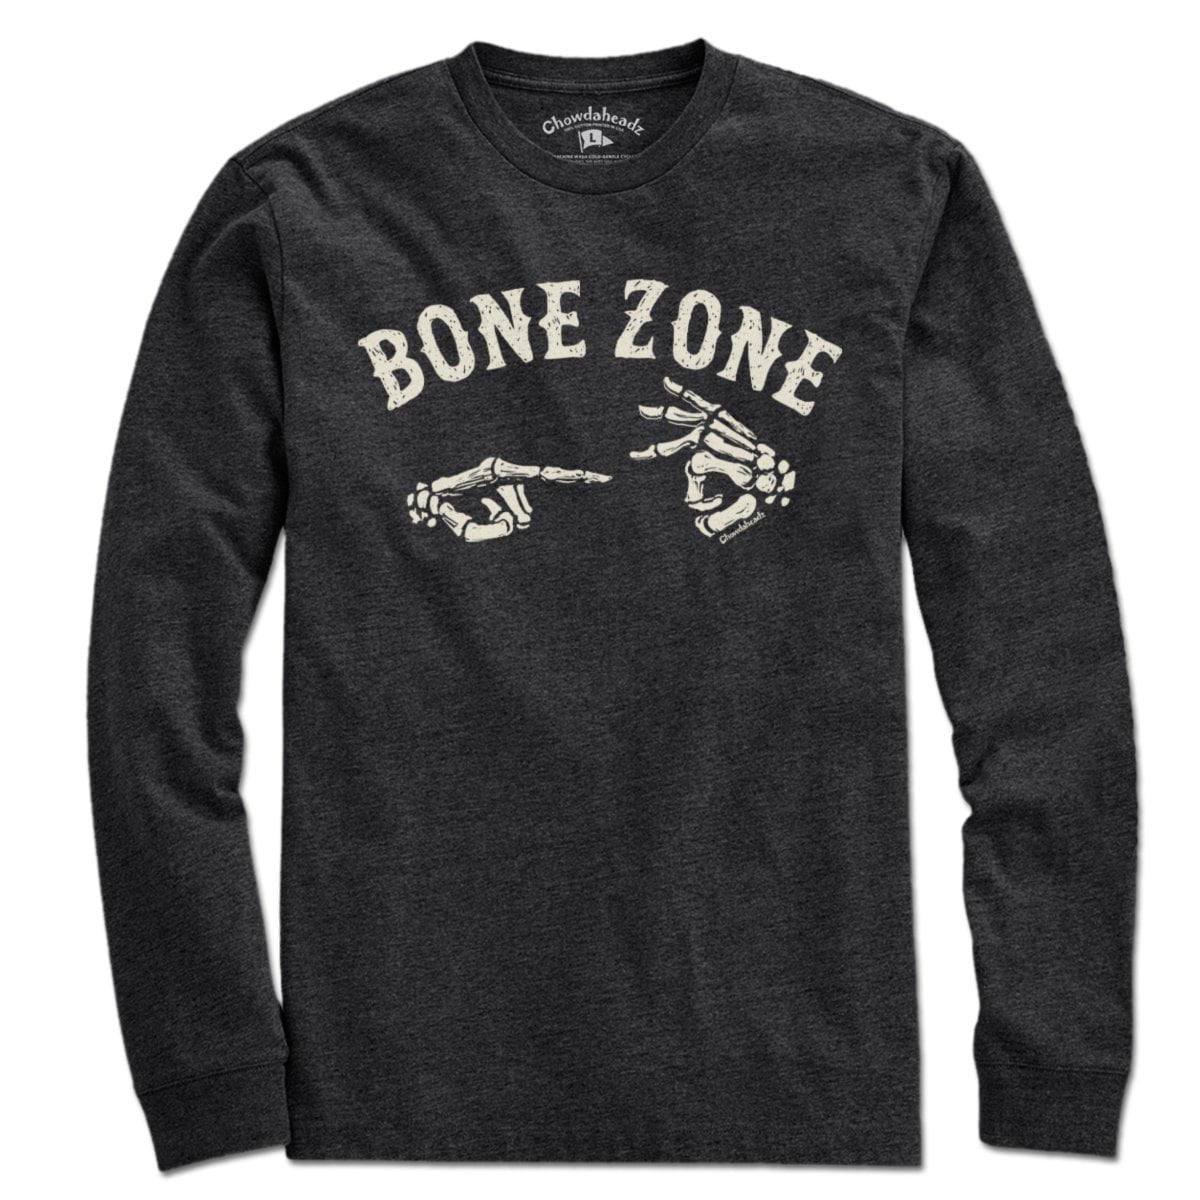 Bone Zone T-Shirt - Chowdaheadz